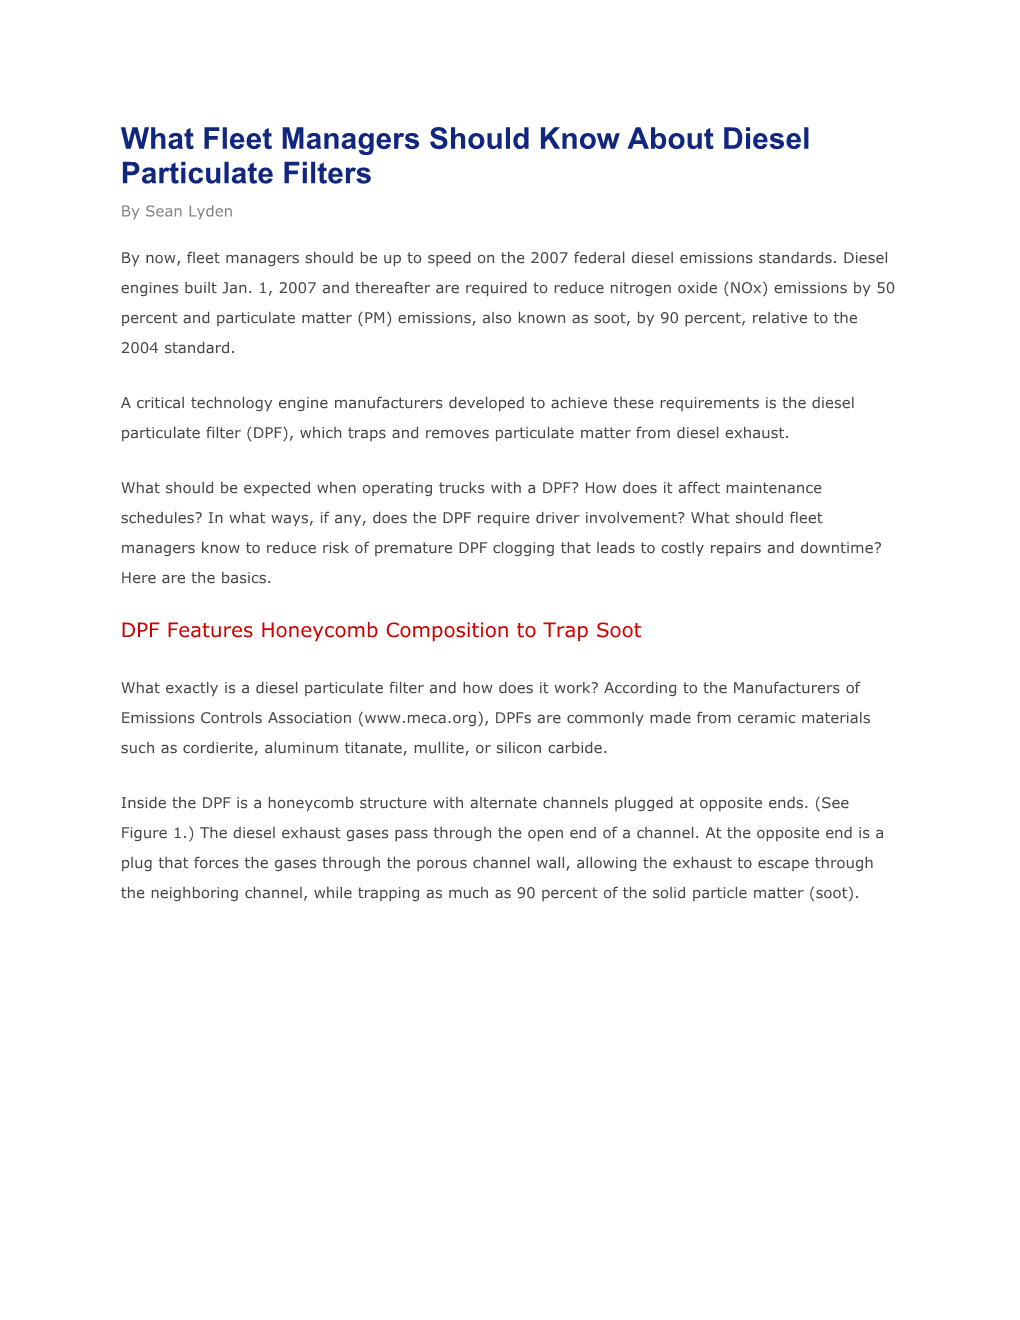 Diesel Particulate Filters - DPF